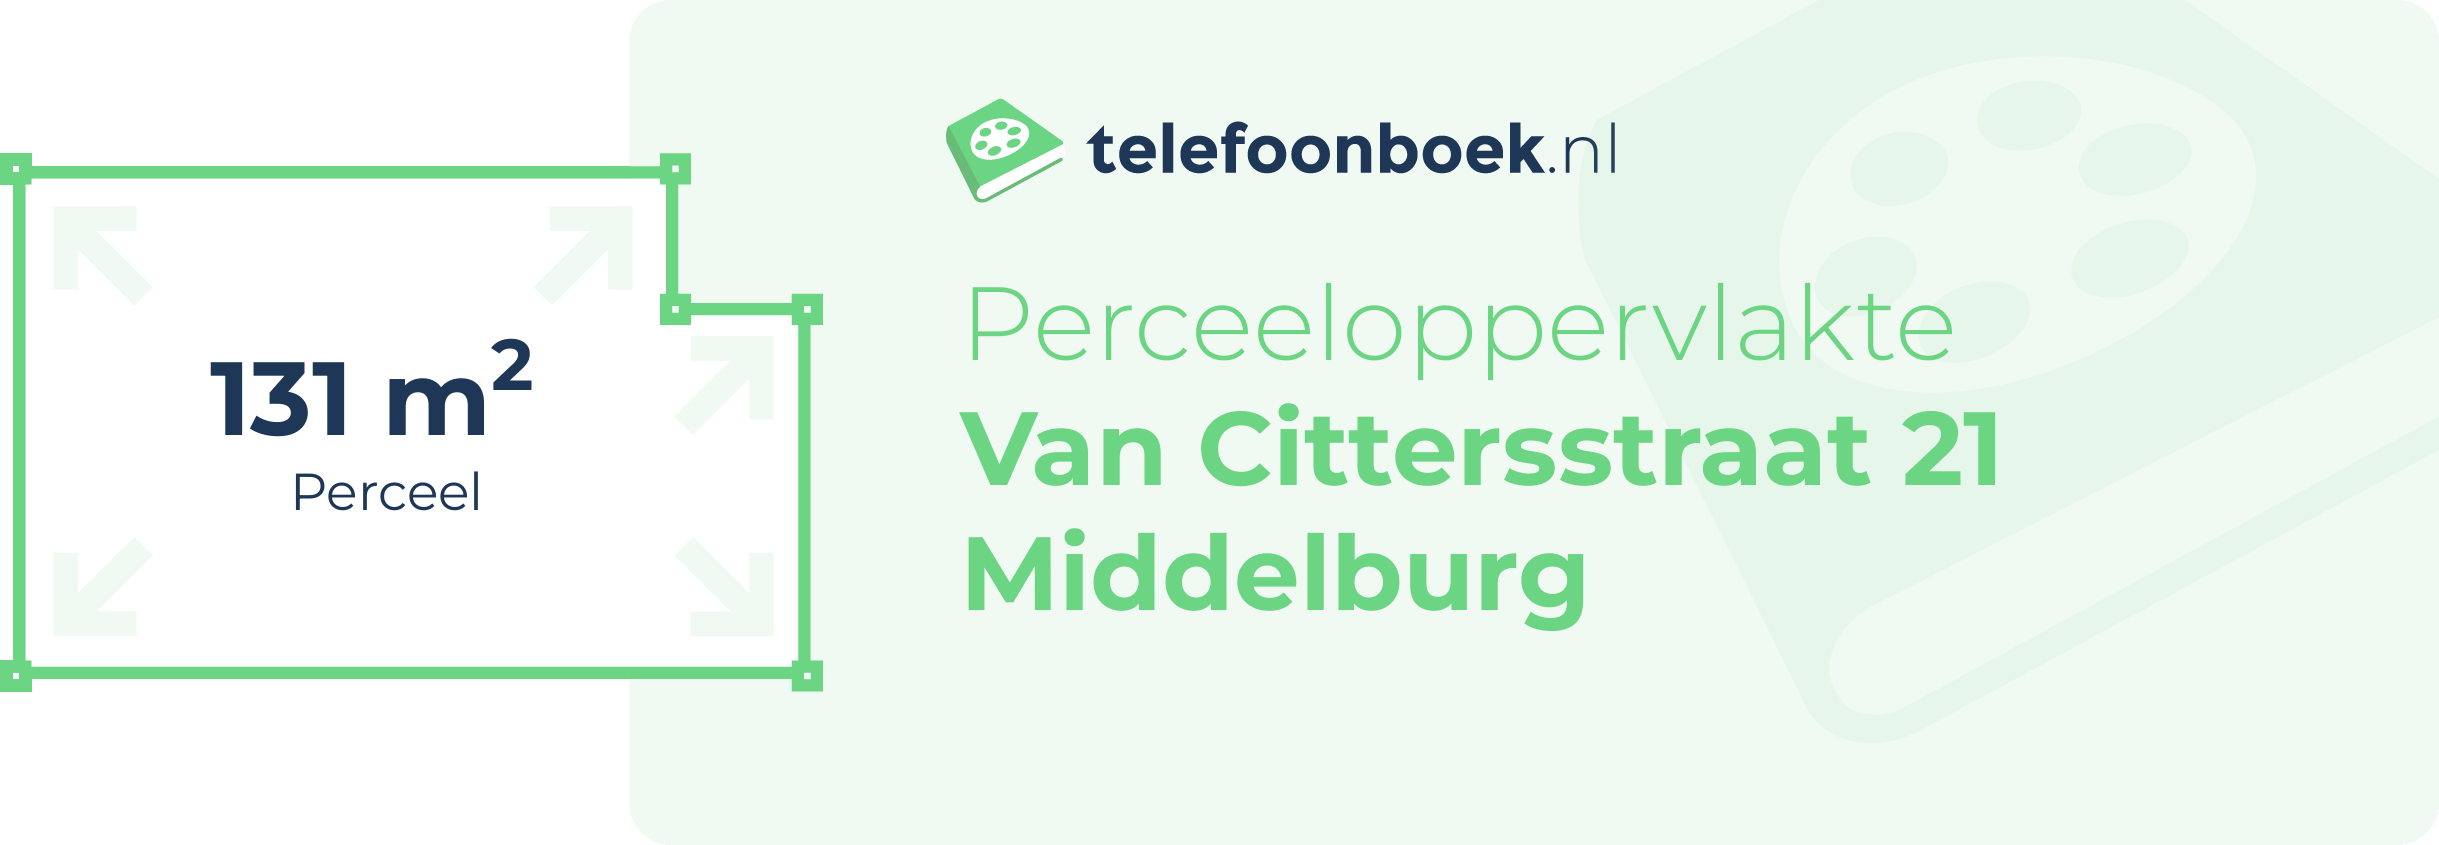 Perceeloppervlakte Van Cittersstraat 21 Middelburg